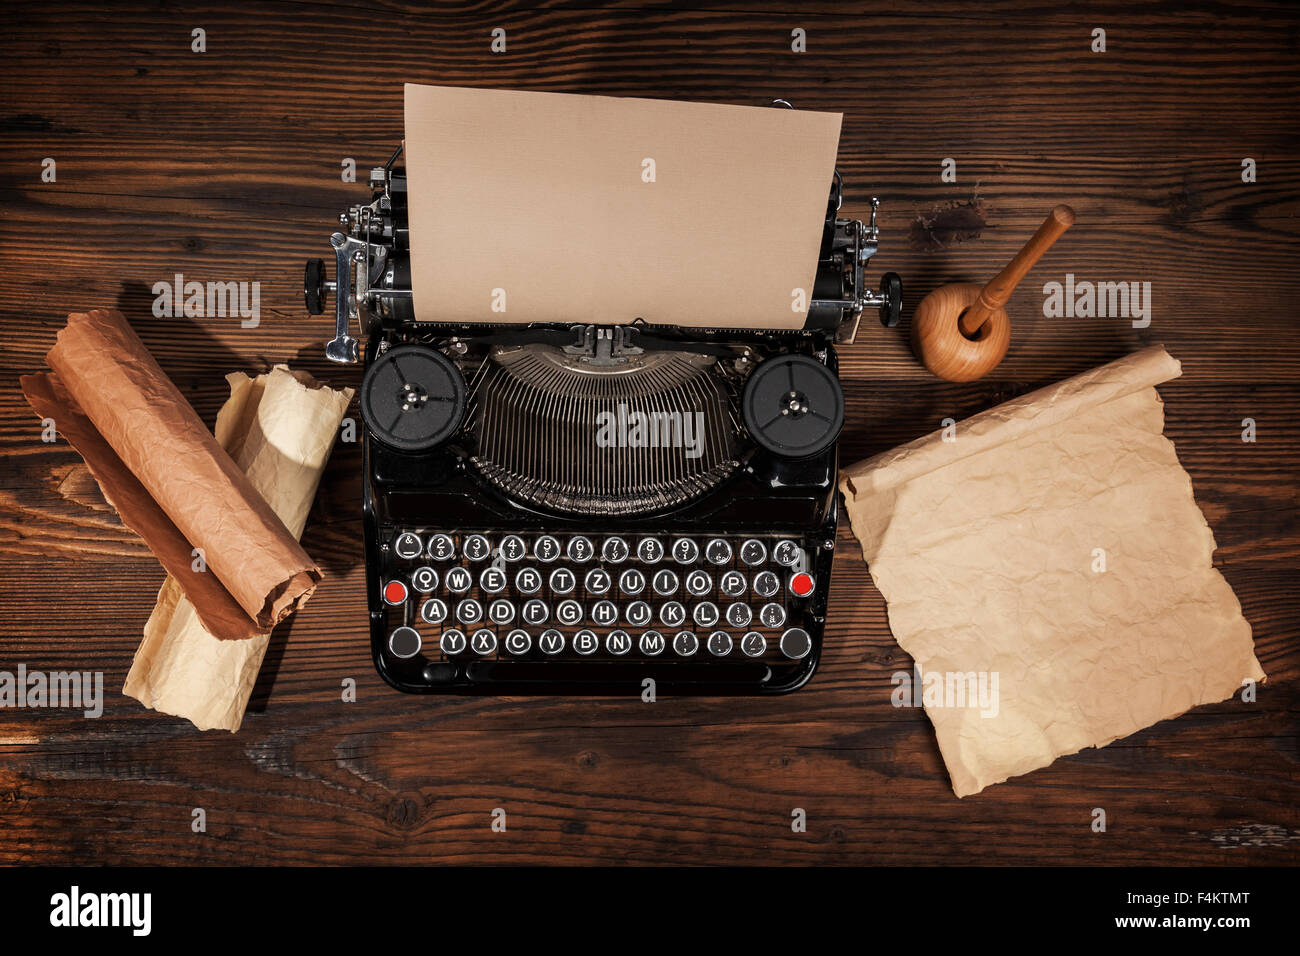 Old typewriter on wooden table Stock Photo